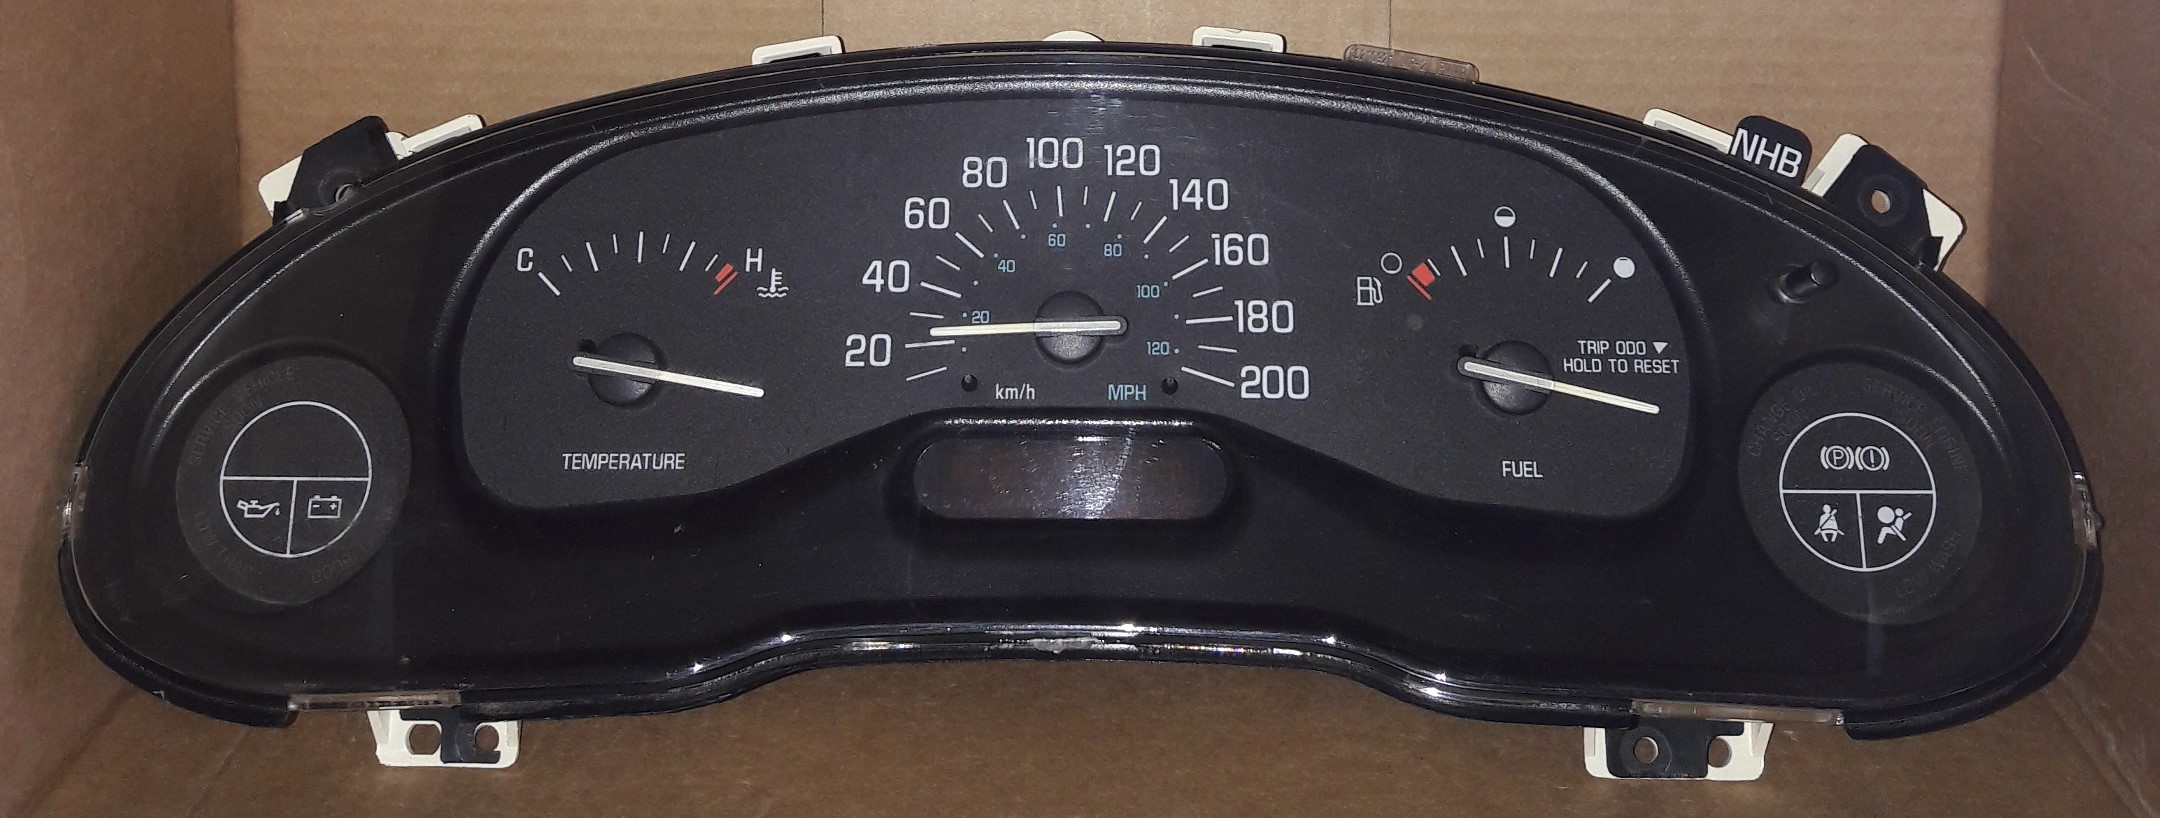 1999 ONLY Buick Regal Century Rebuilt Speedometer Gauge Cluster SUPERCHARGED GLM 